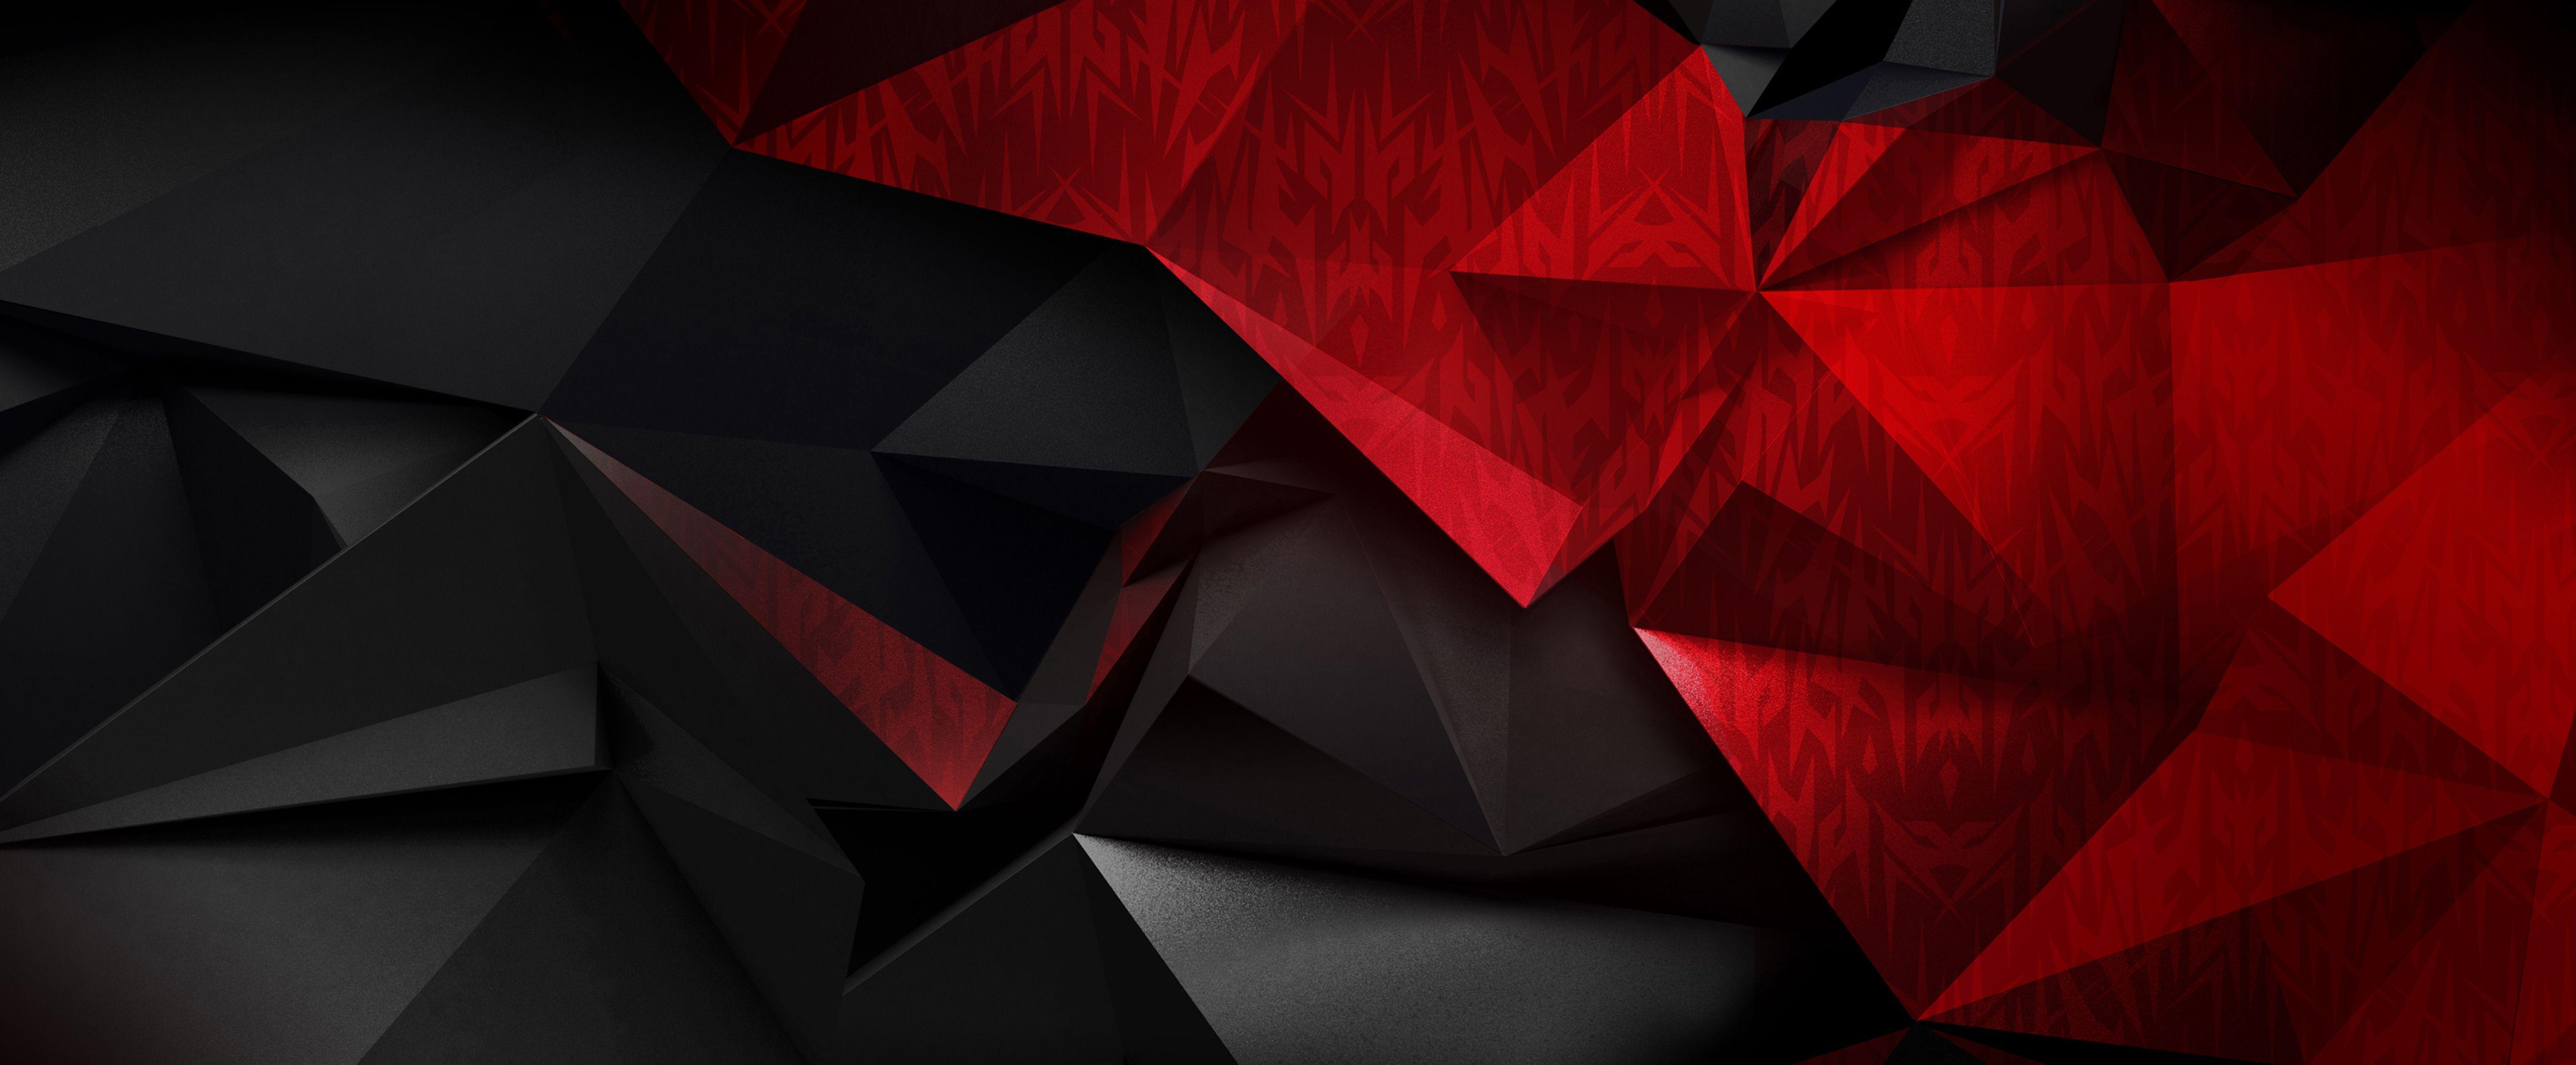 Acer Predator. Multi Color Wallpaper (21:9 [5K]). Red background image, Gaming wallpaper hd, Red background